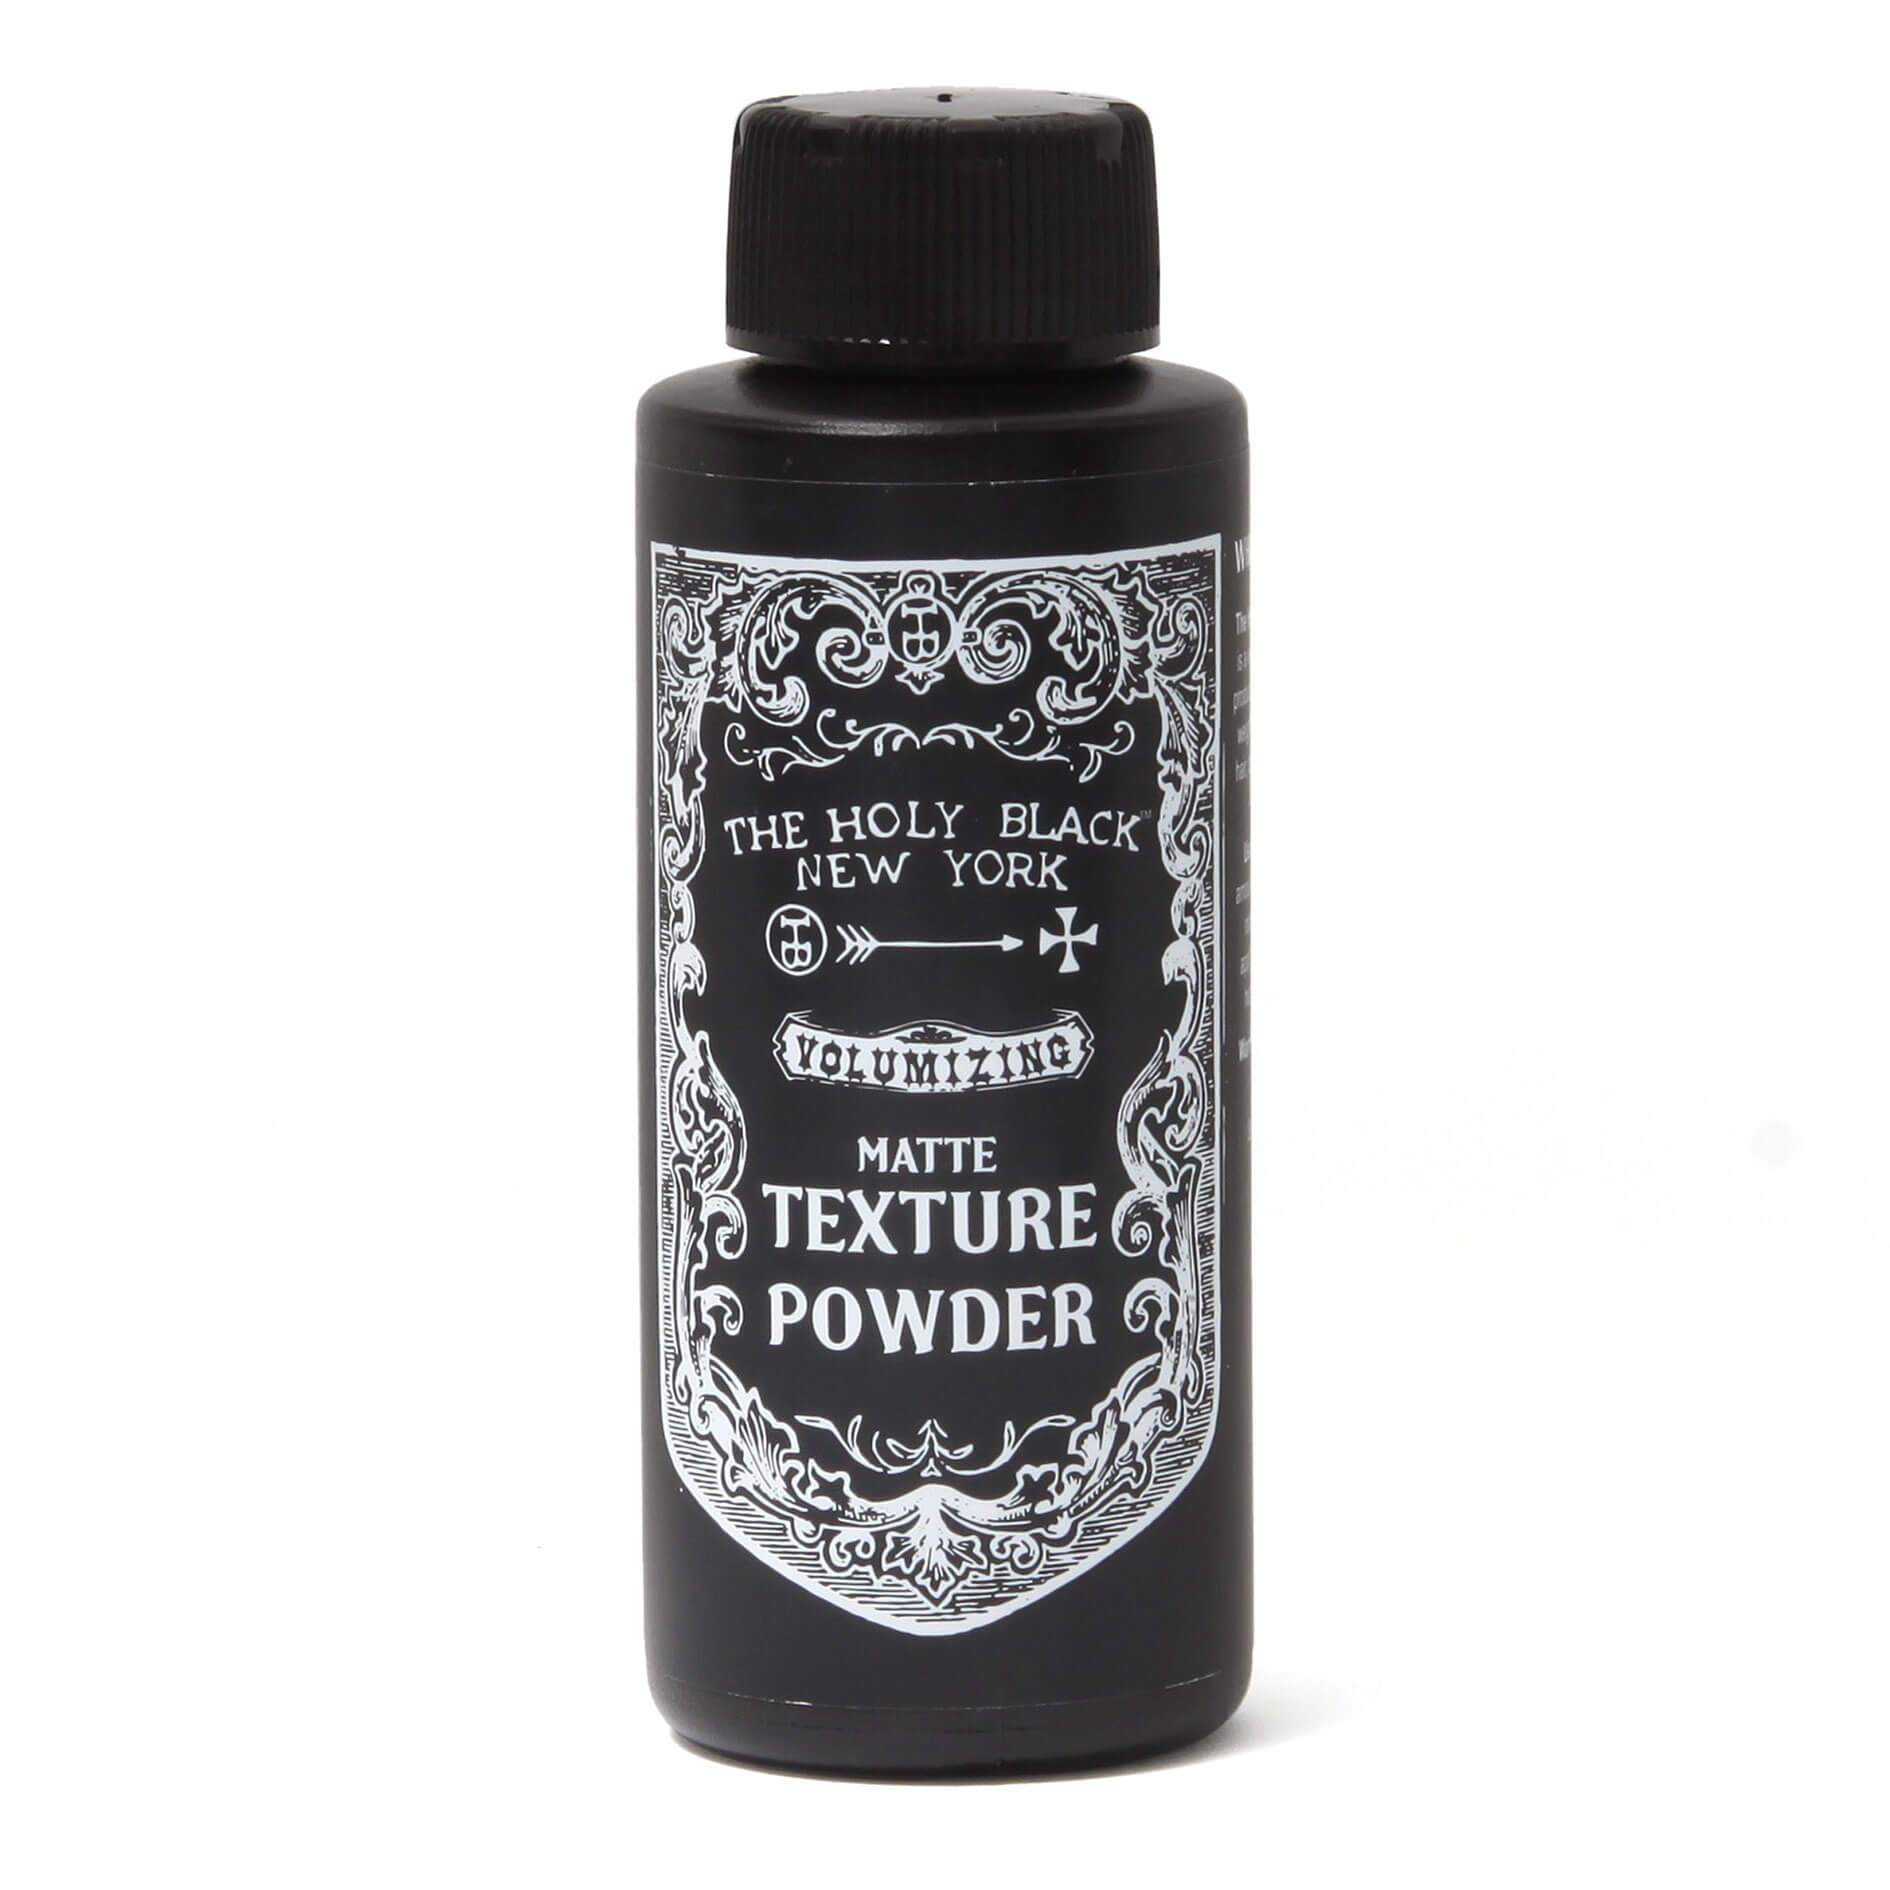 The Holy Black Texture Powder